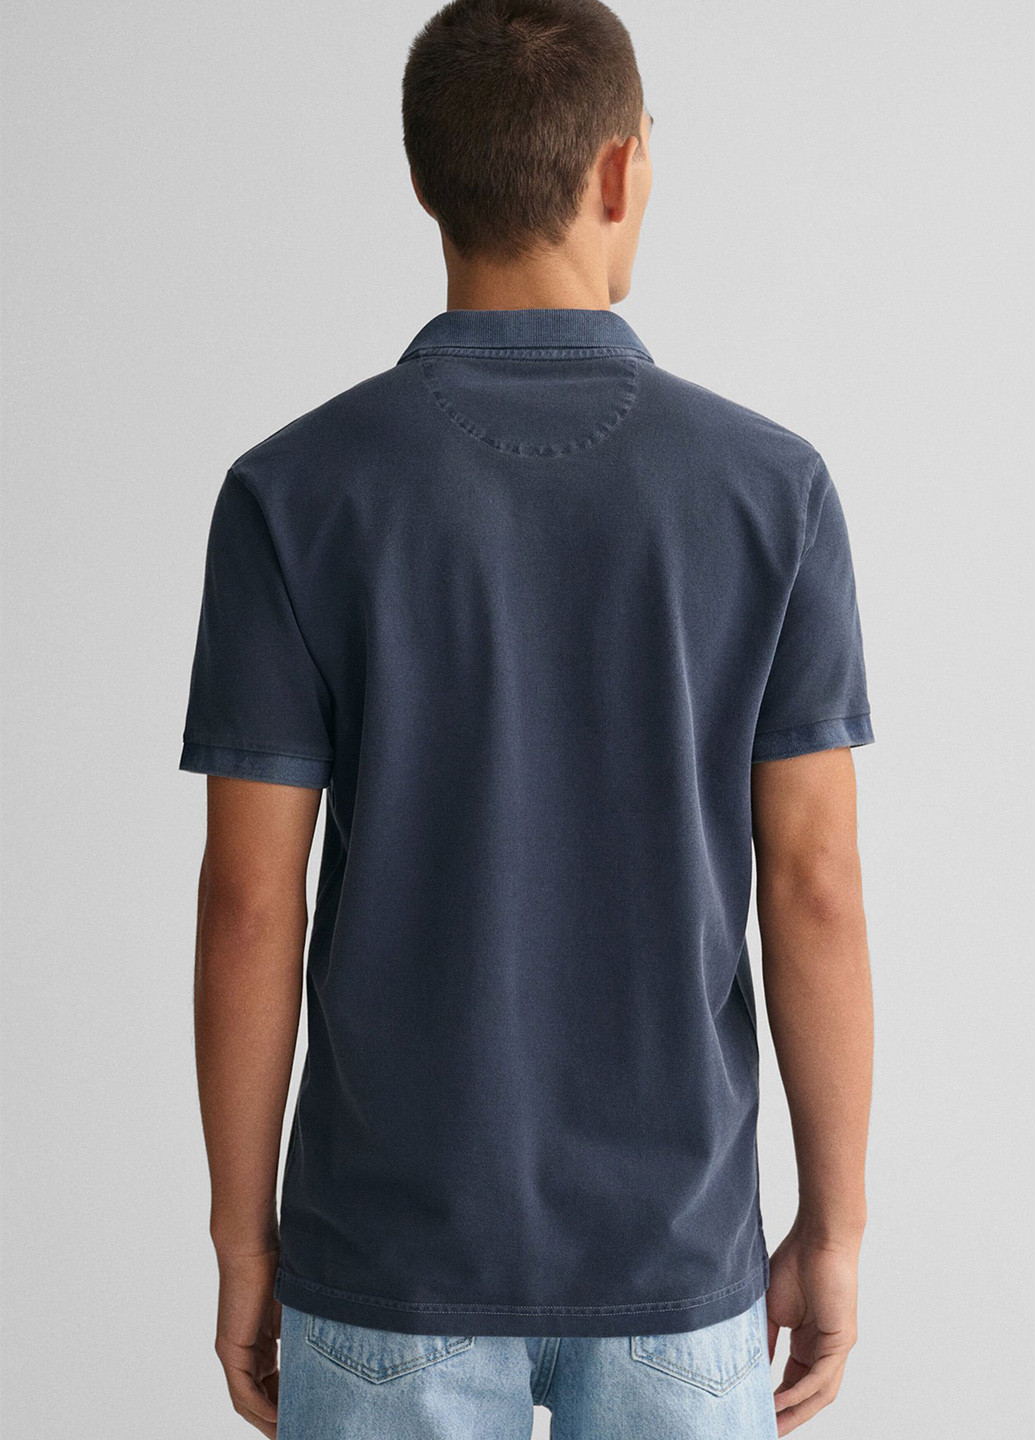 Серо-голубой футболка-поло для мужчин Gant однотонная